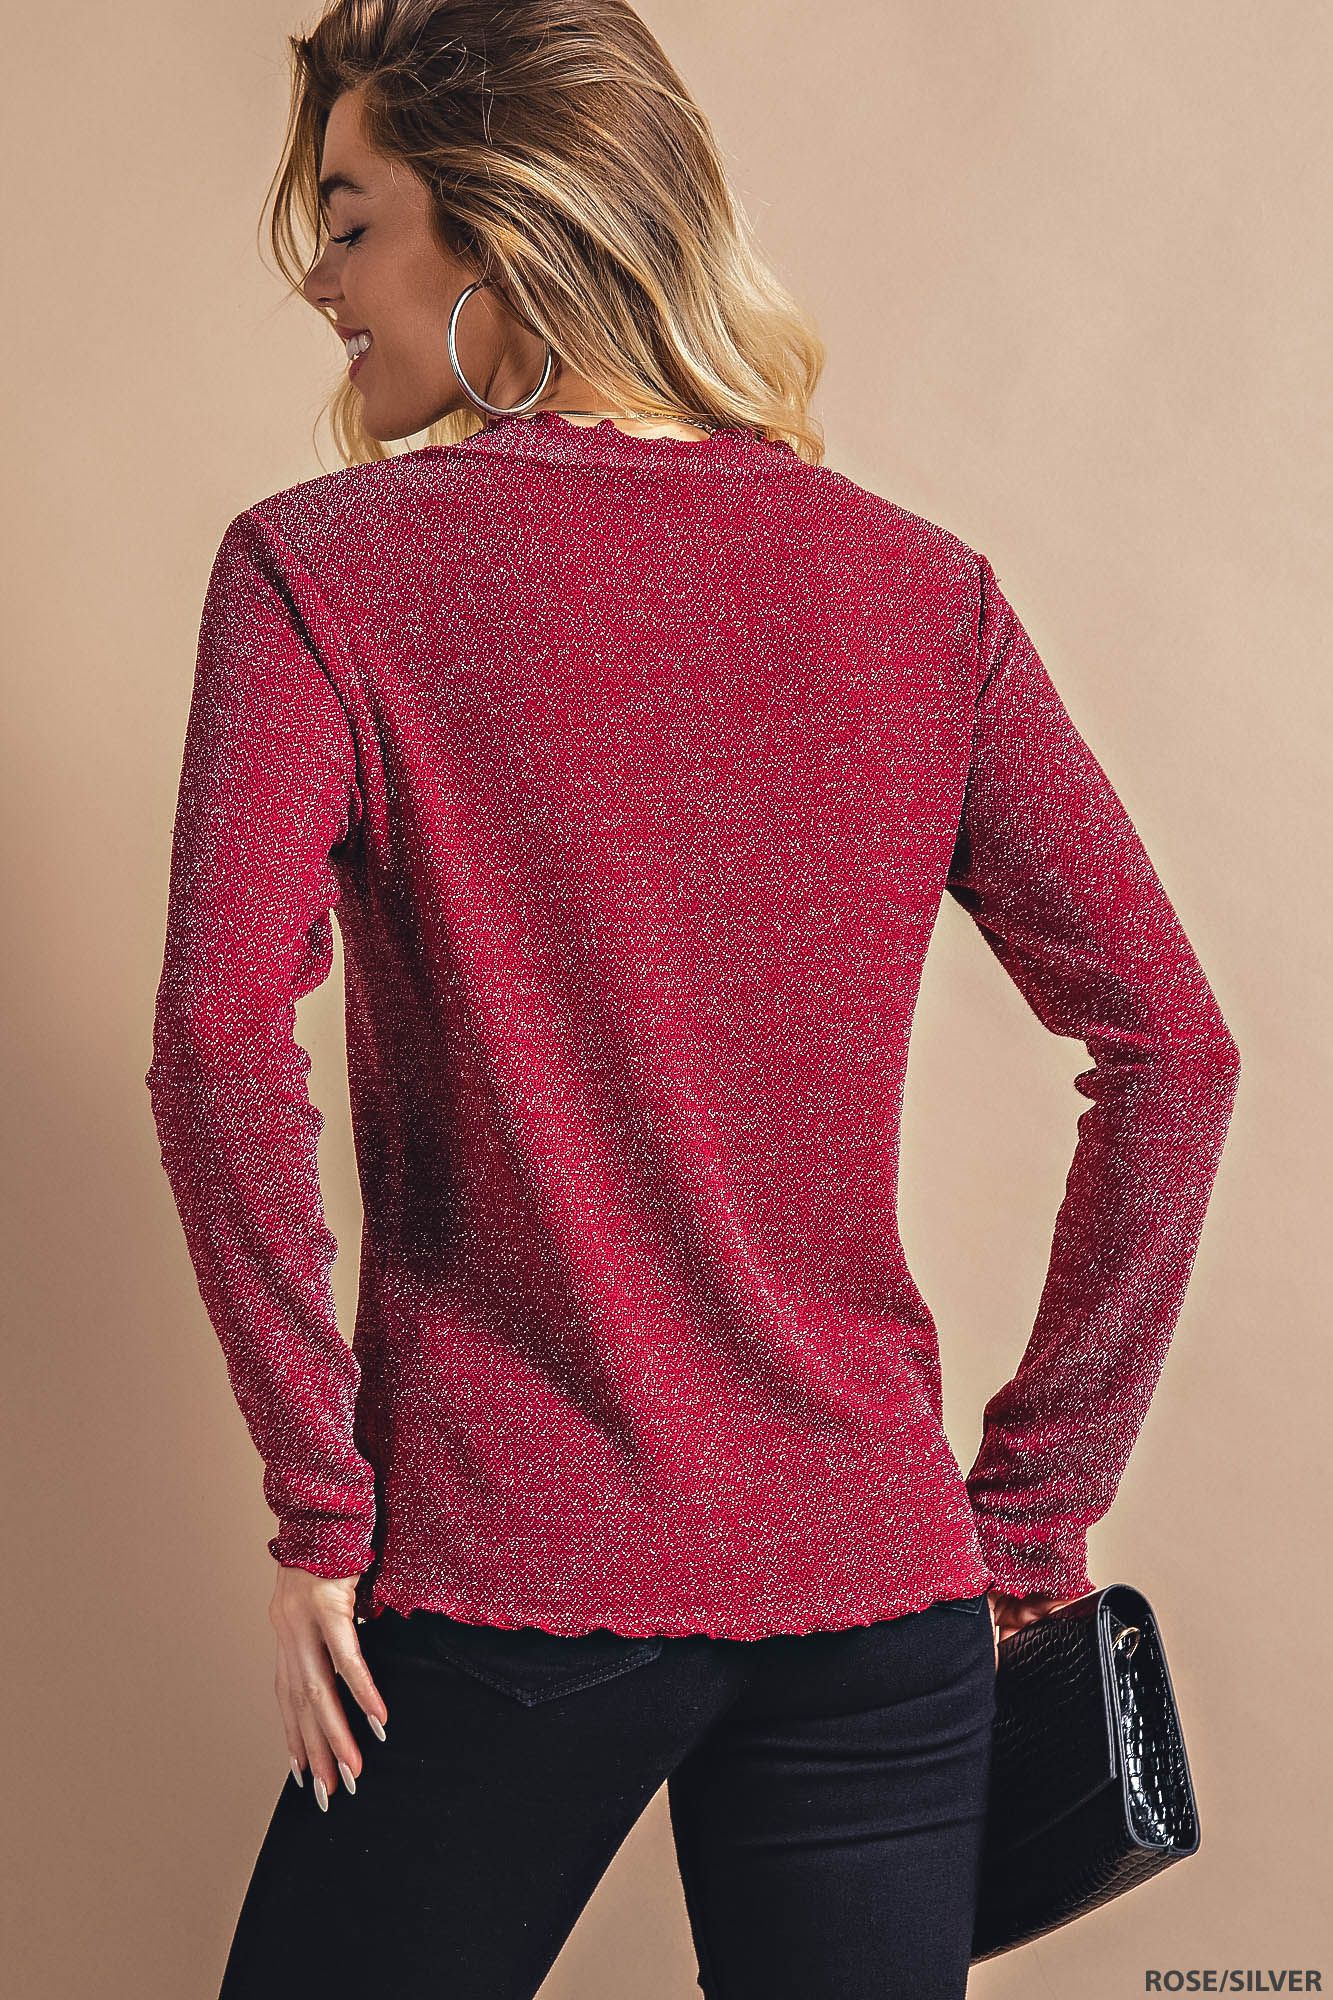 kori america soft slinky fabric with lurex mock neck B7820 in rose/silver